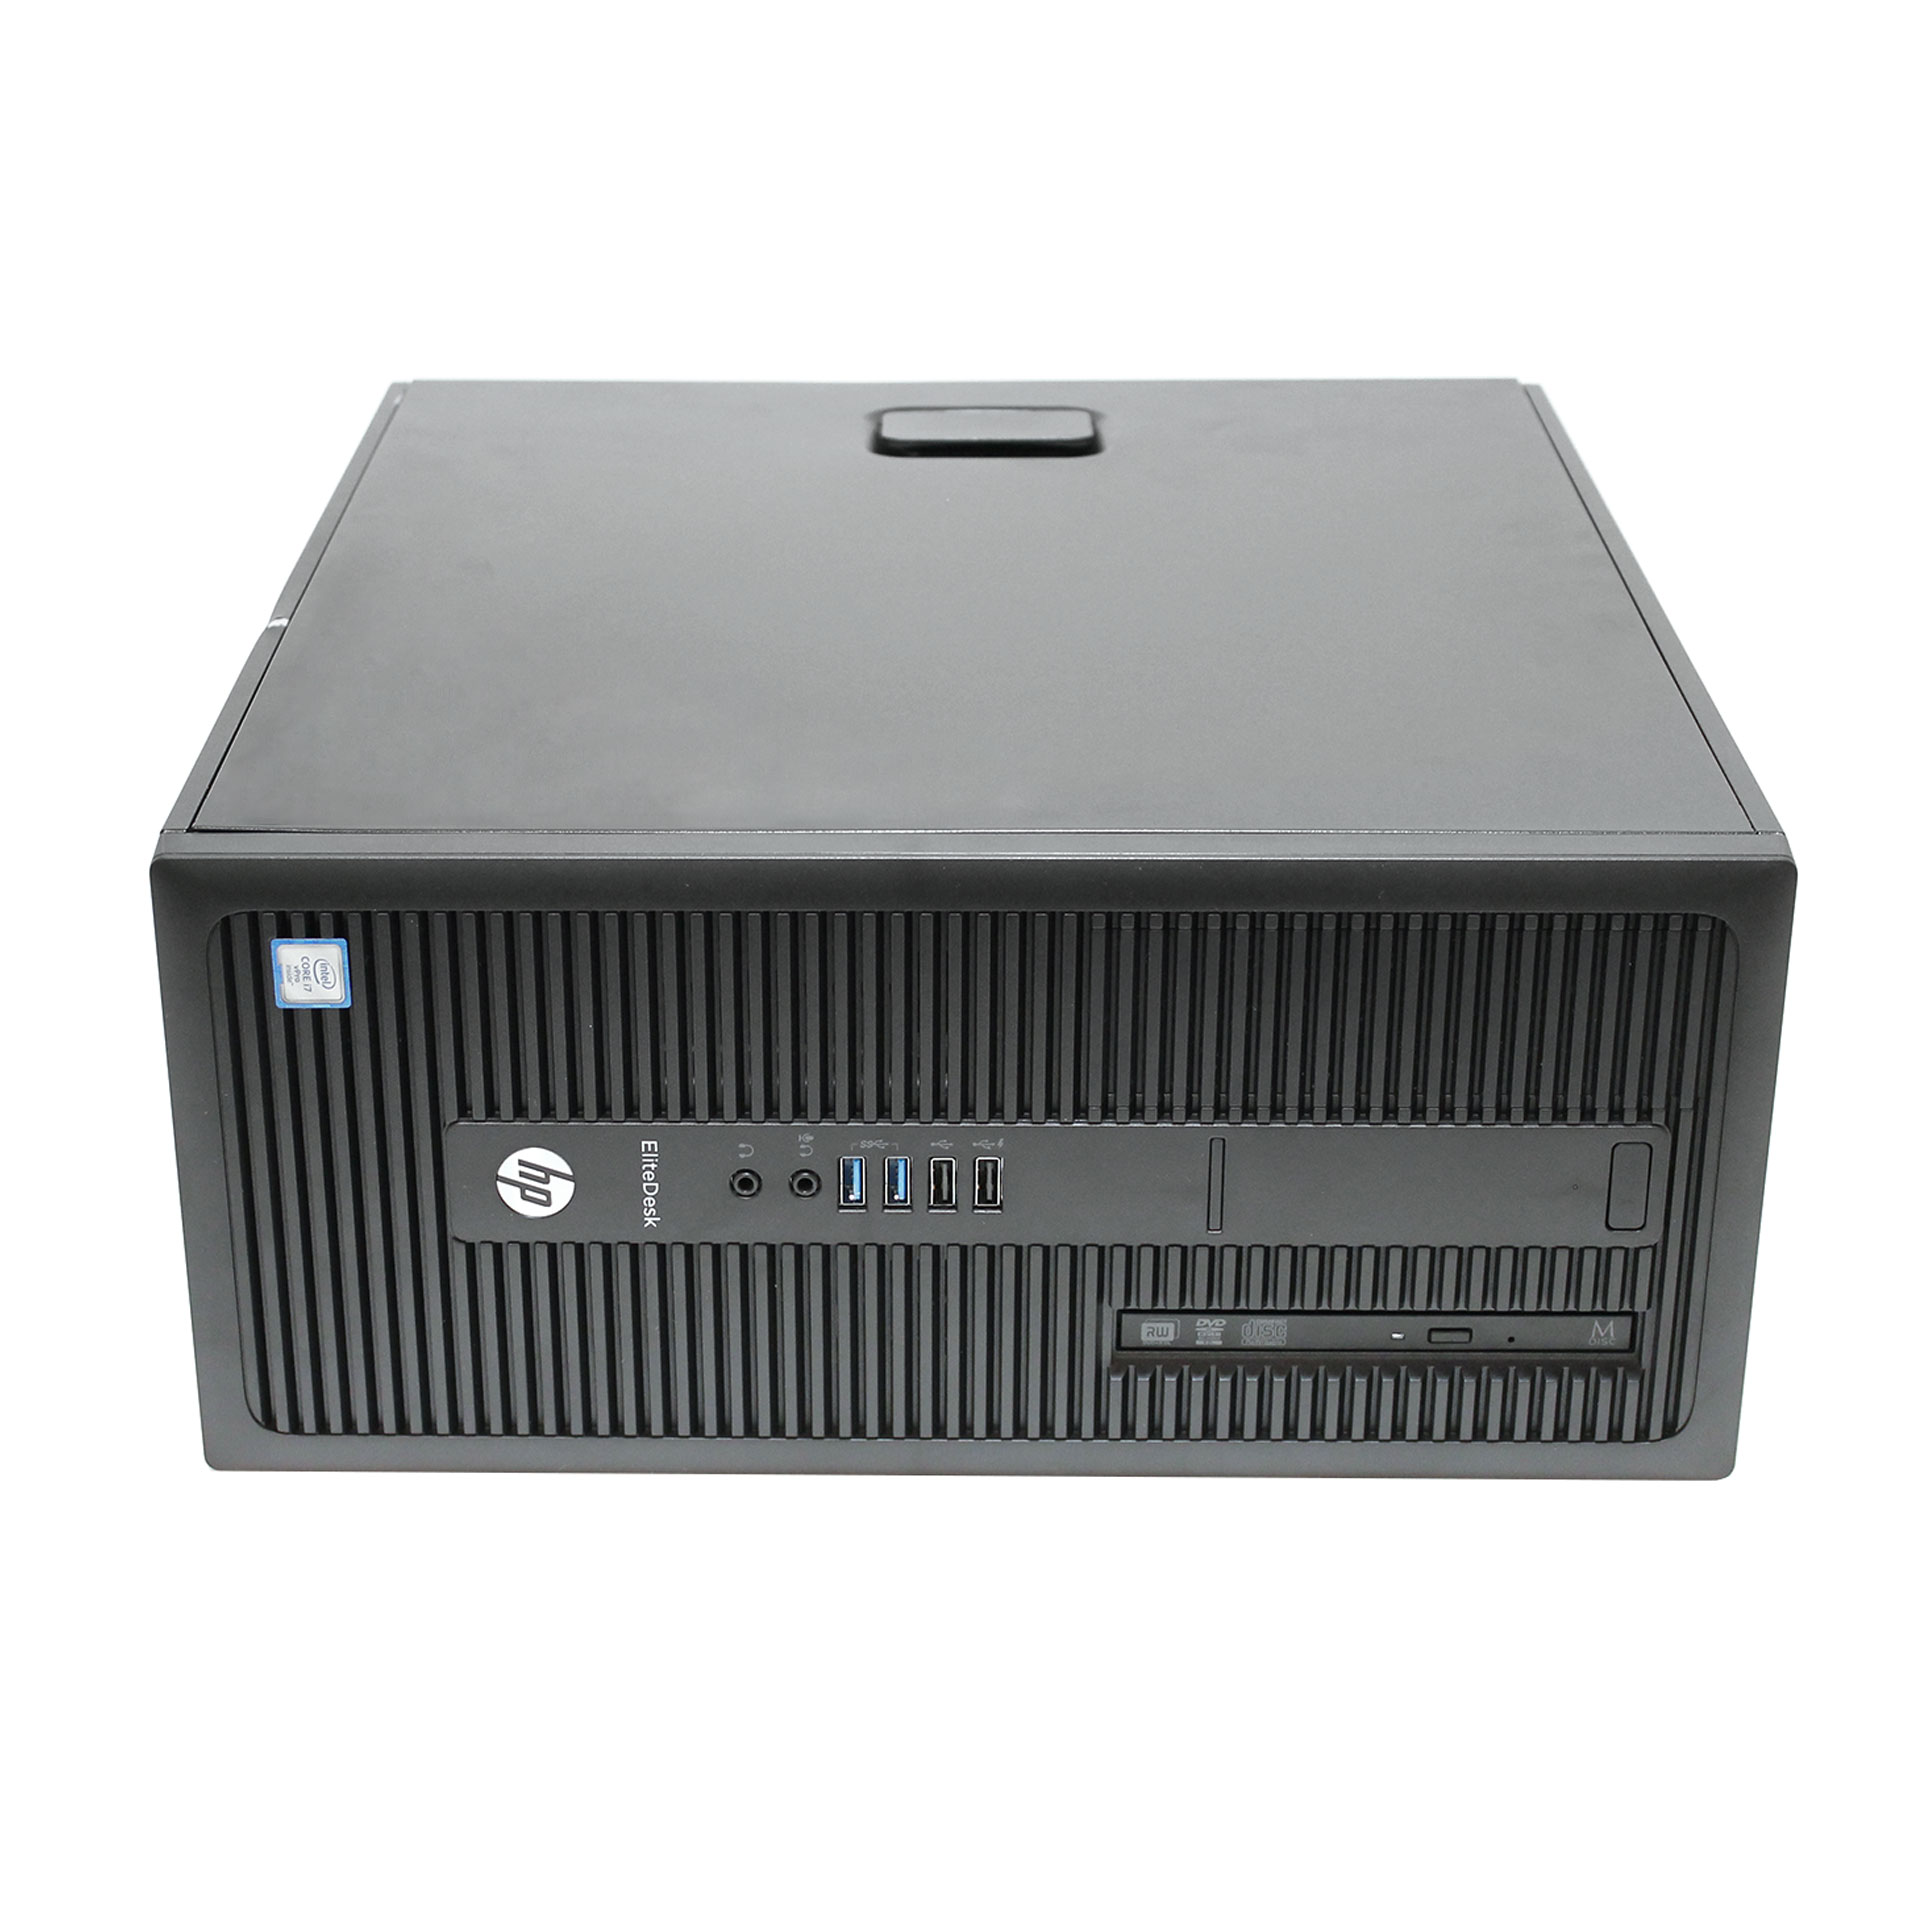 HP EliteDesk 800 G2 i7-6700 4GB 500GB X1R38US#ABA Integr. Video